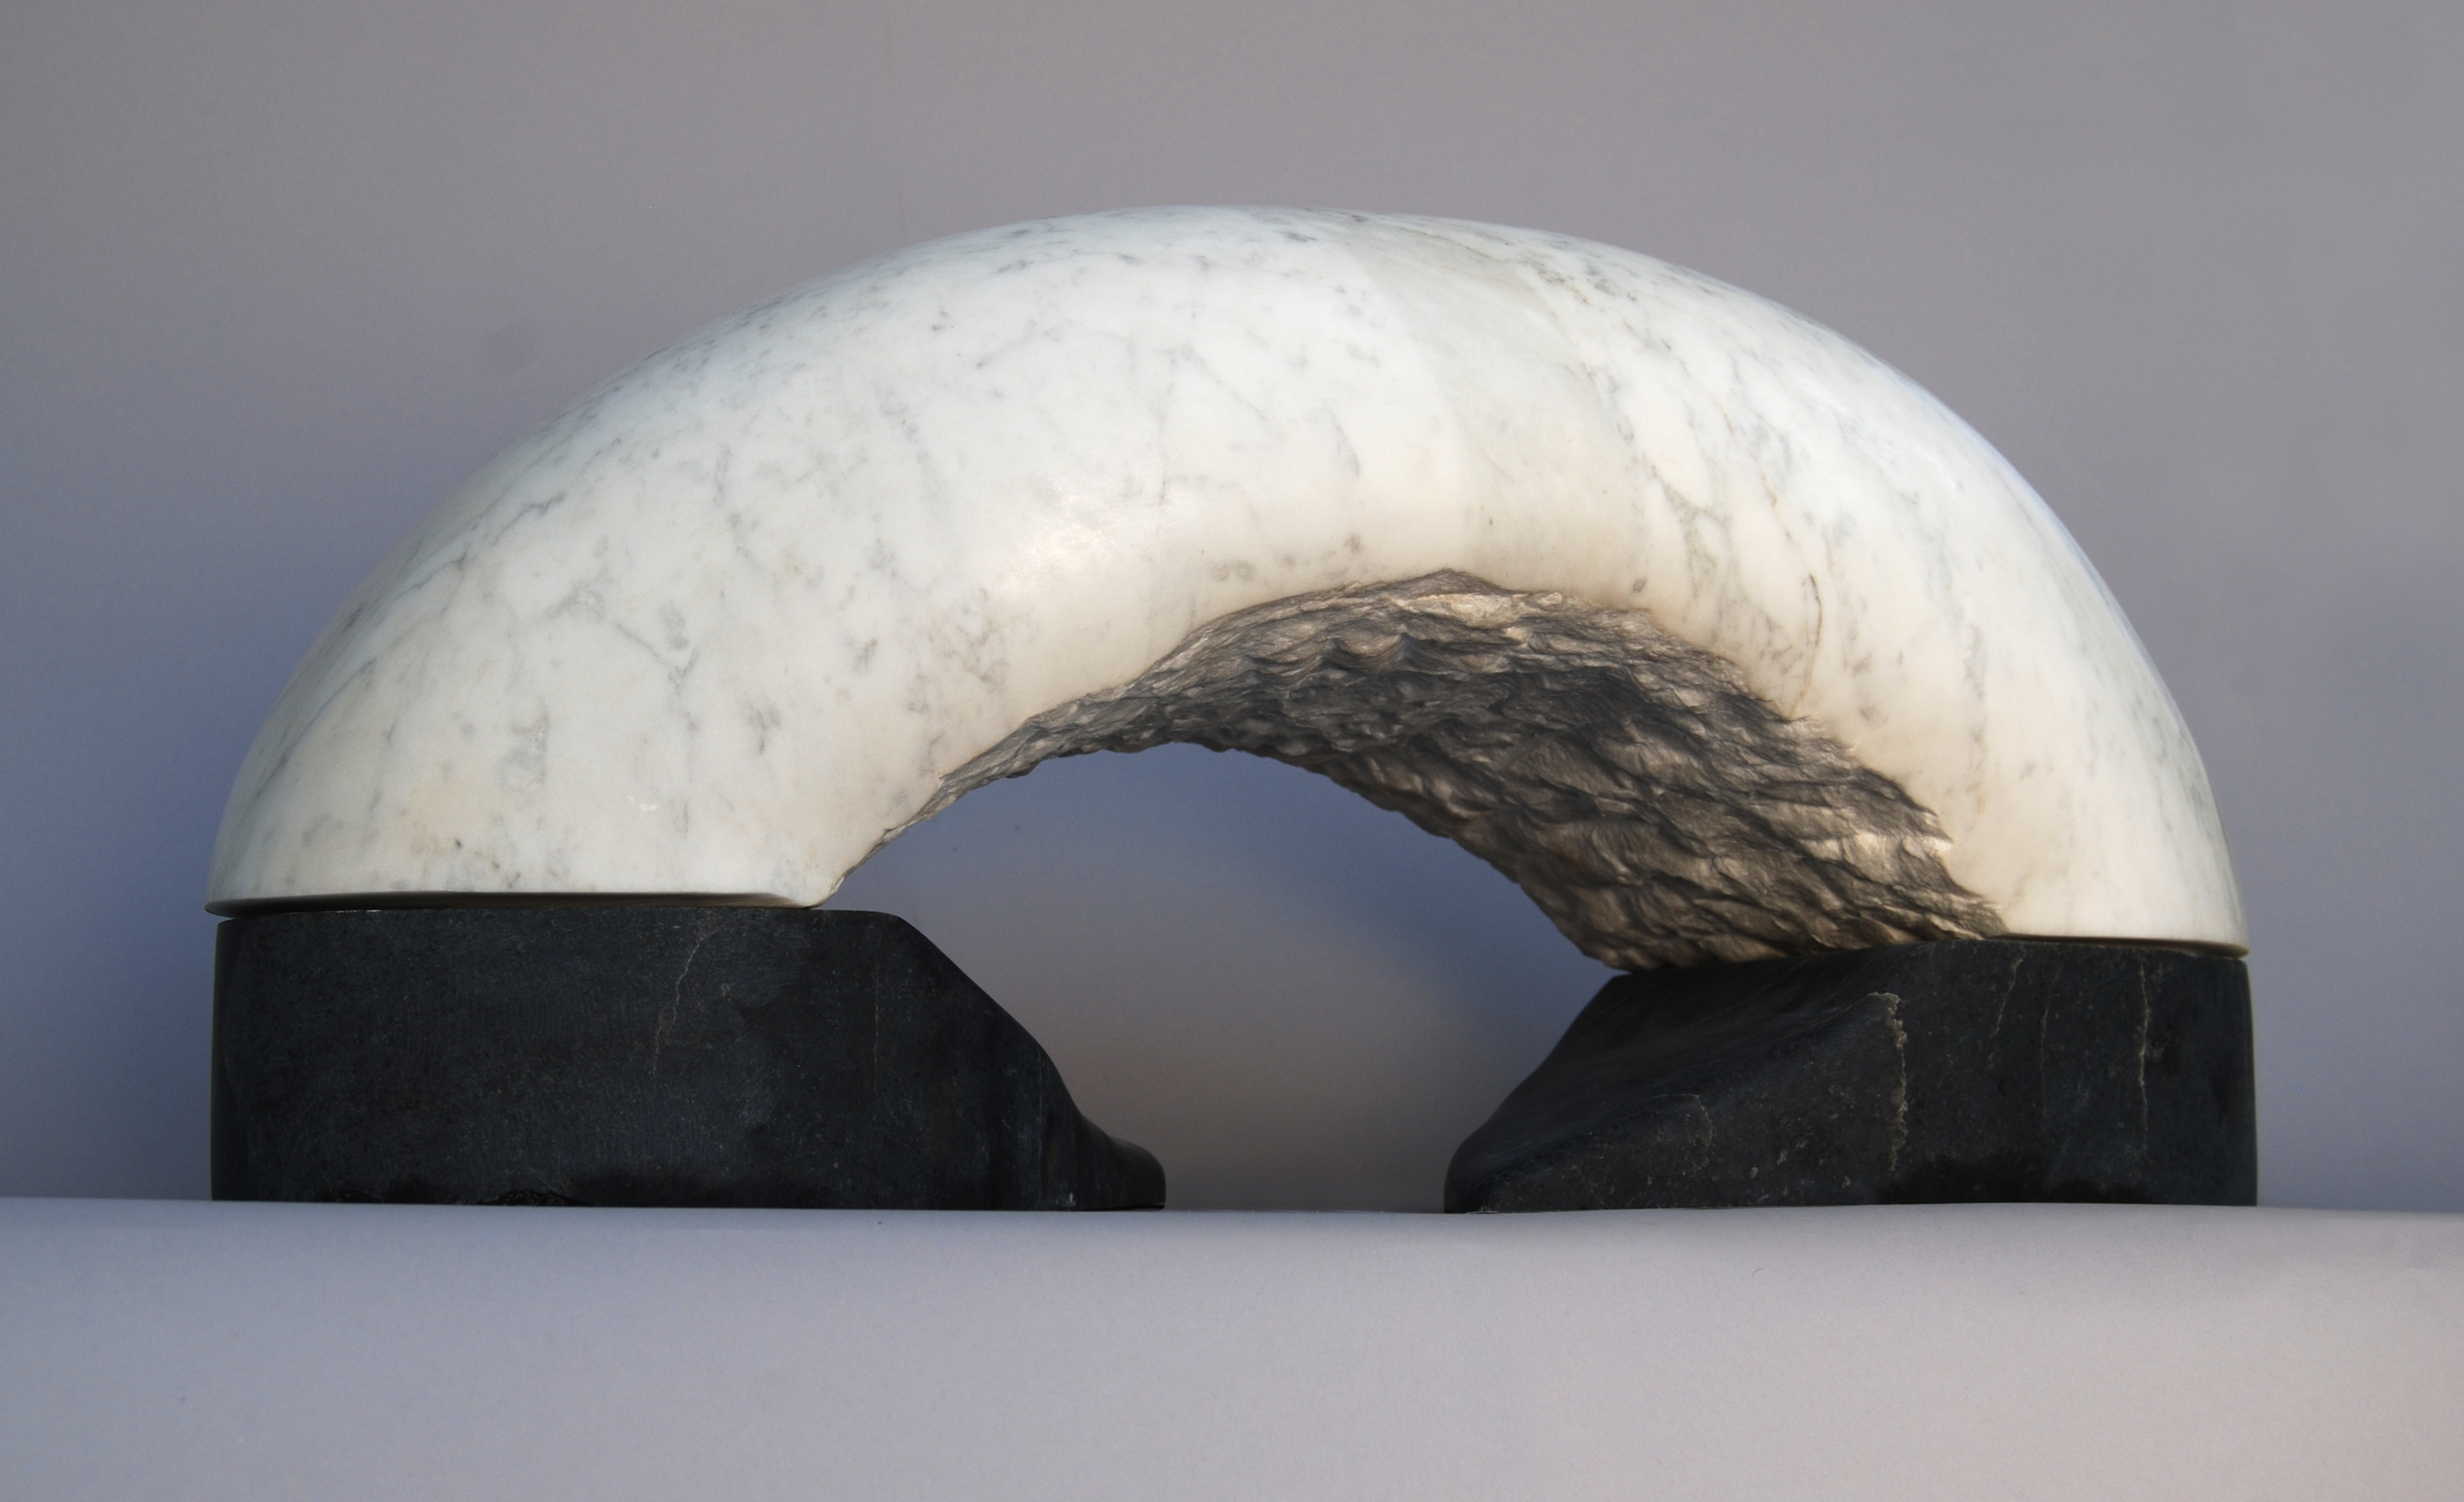 Ken Barnes “Stretch”, 24” X 11” X 11”, 2013, white marble